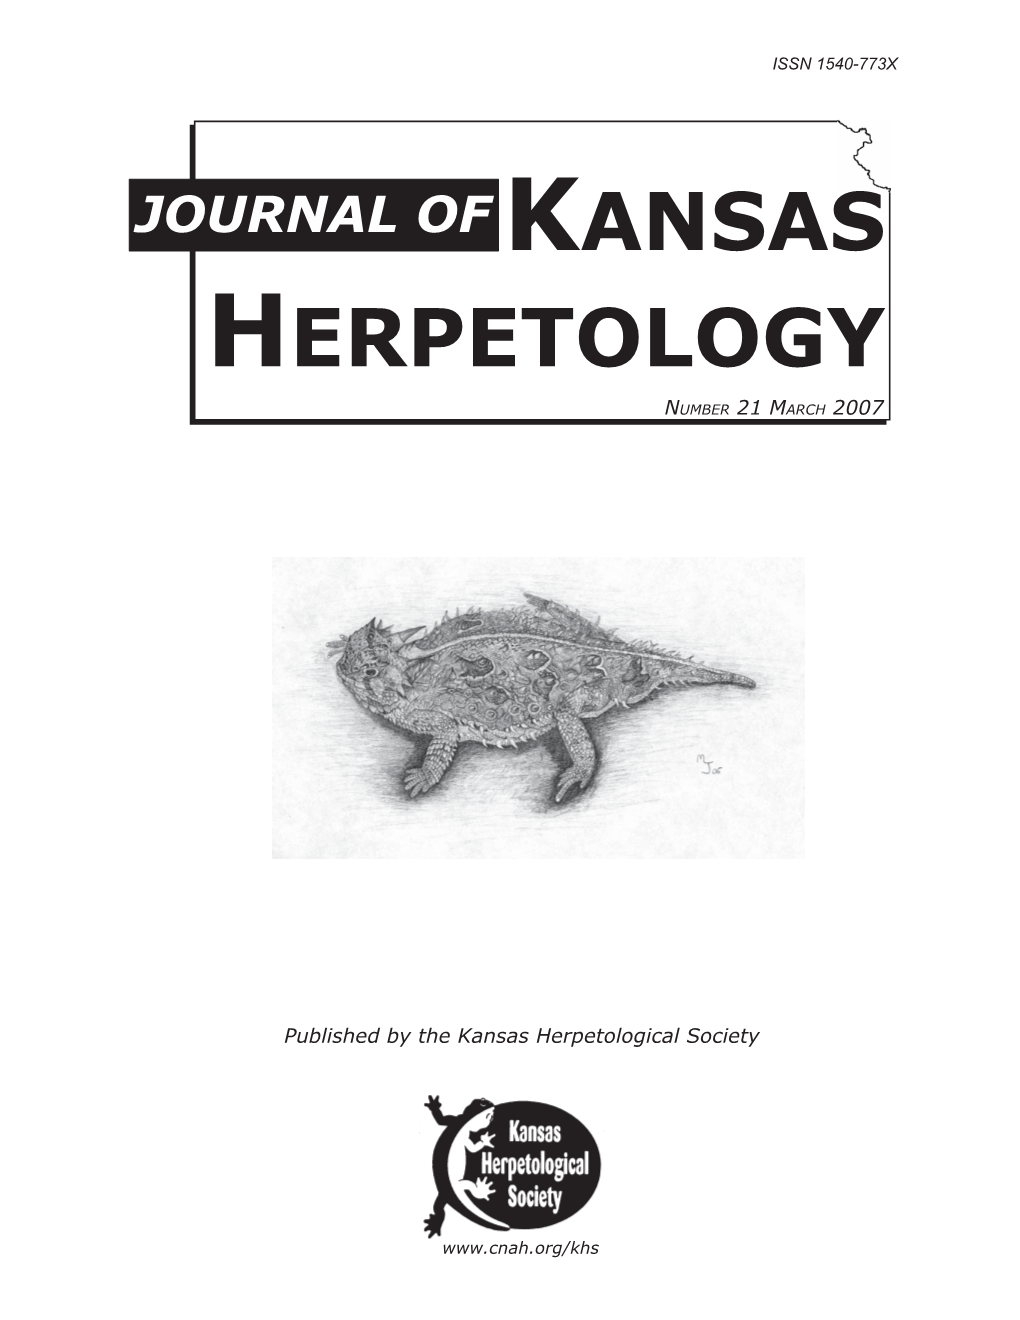 Kansas Herpetology